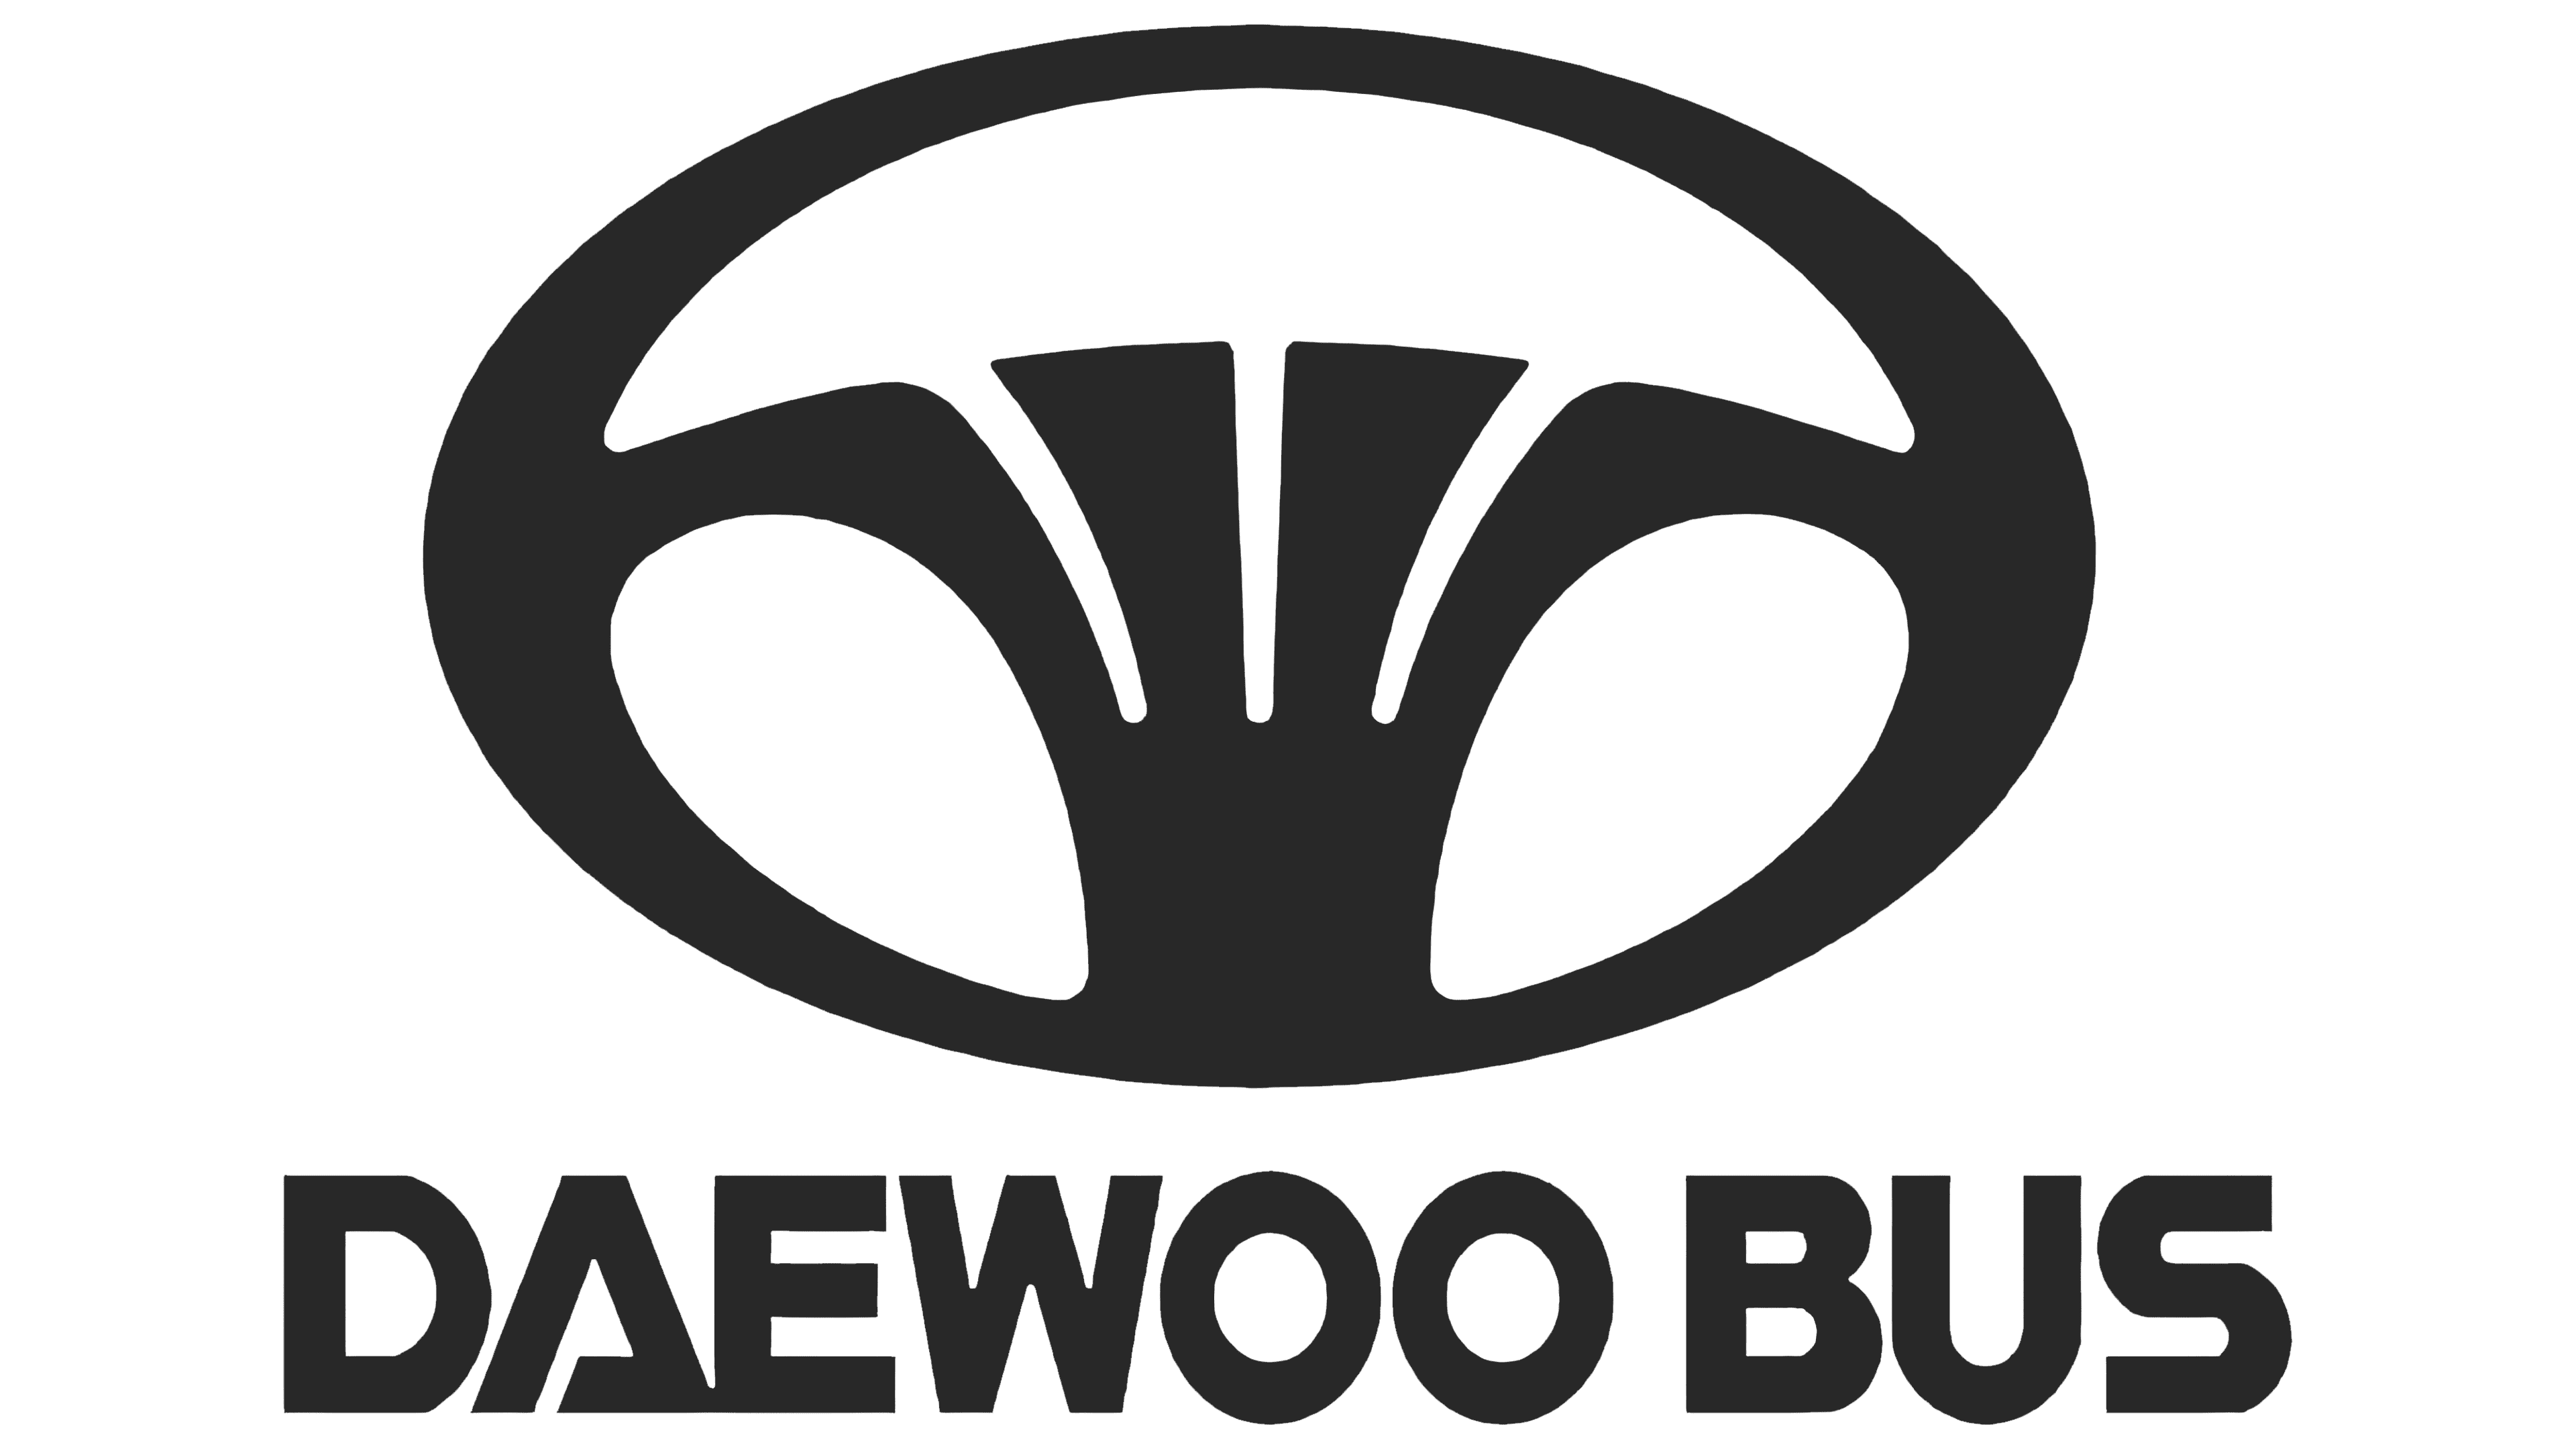 korean automotive logos